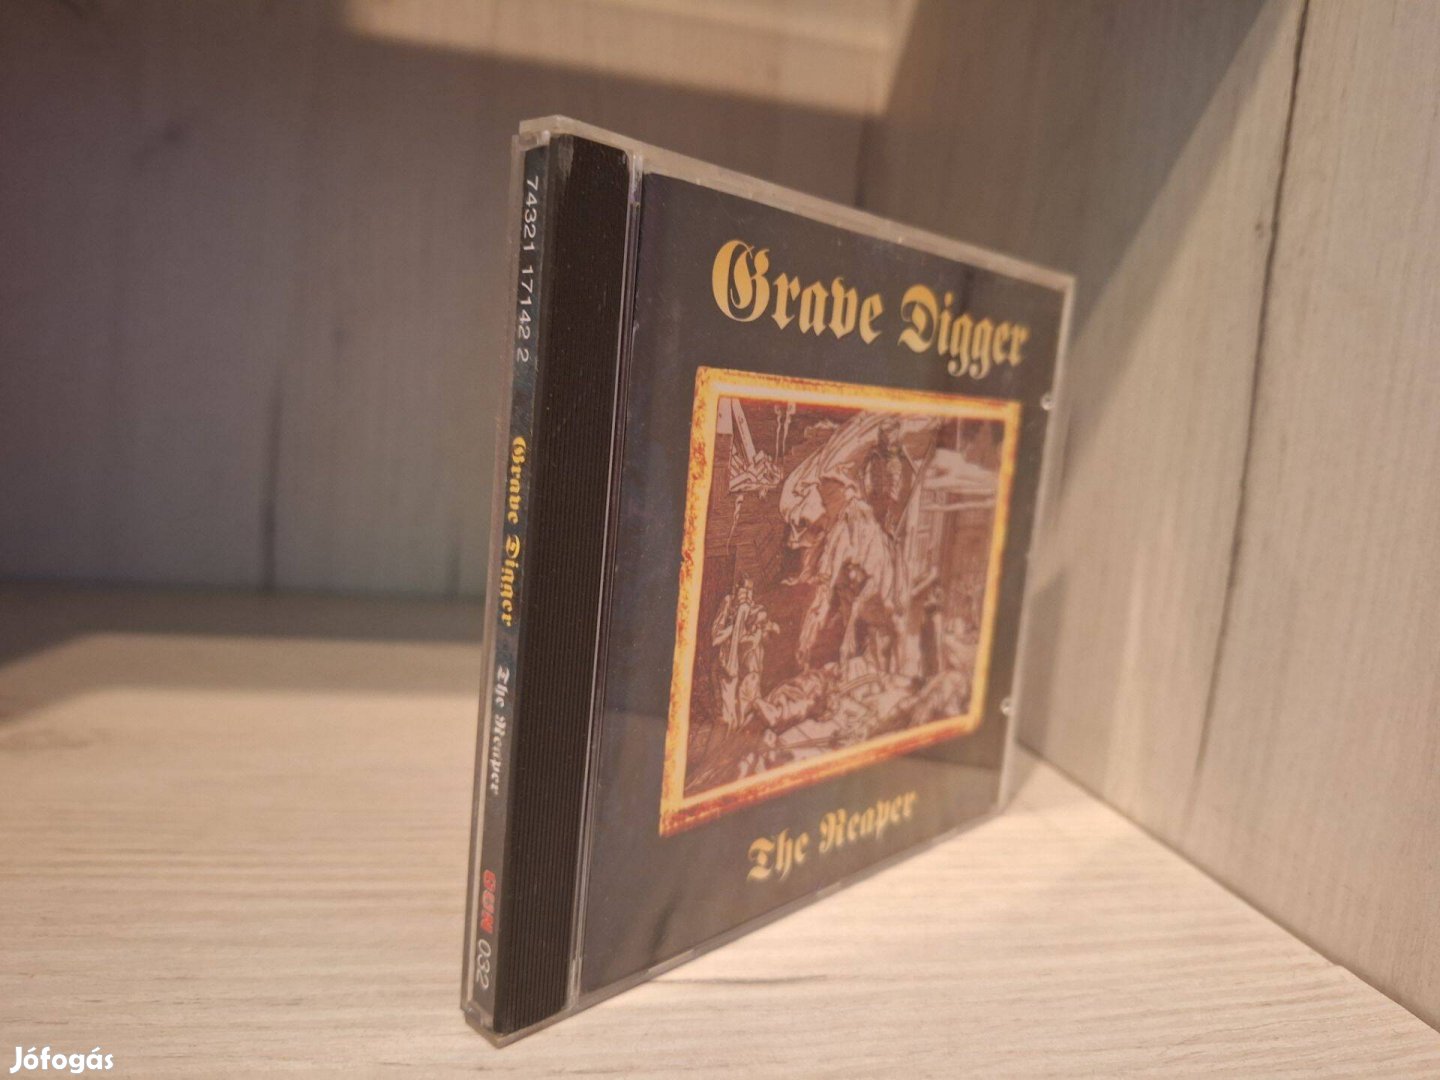 Grave Digger - The Reaper CD